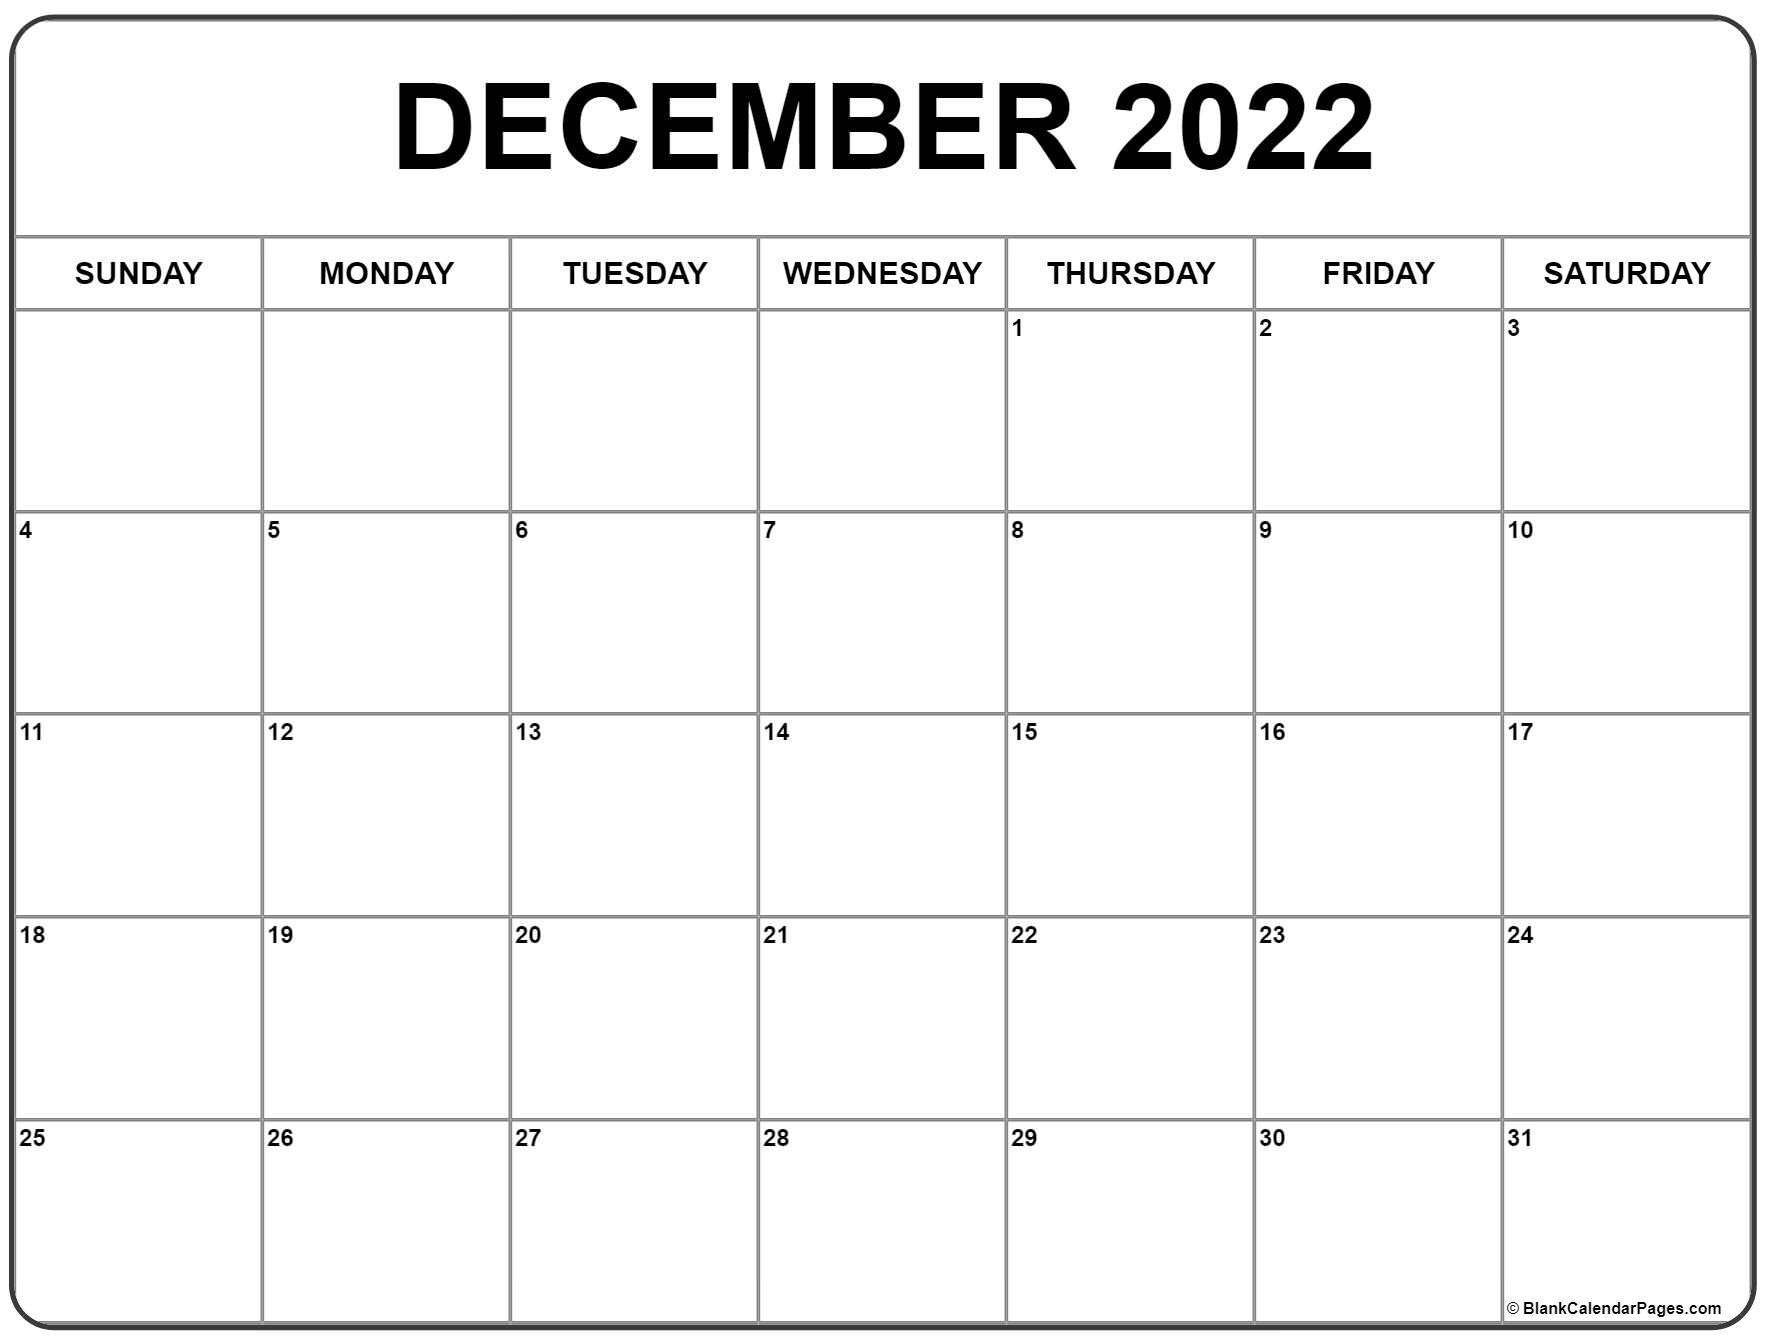 December 2022 Calendar | Free Printable Calendar Templates  December 2022 Calendar Template